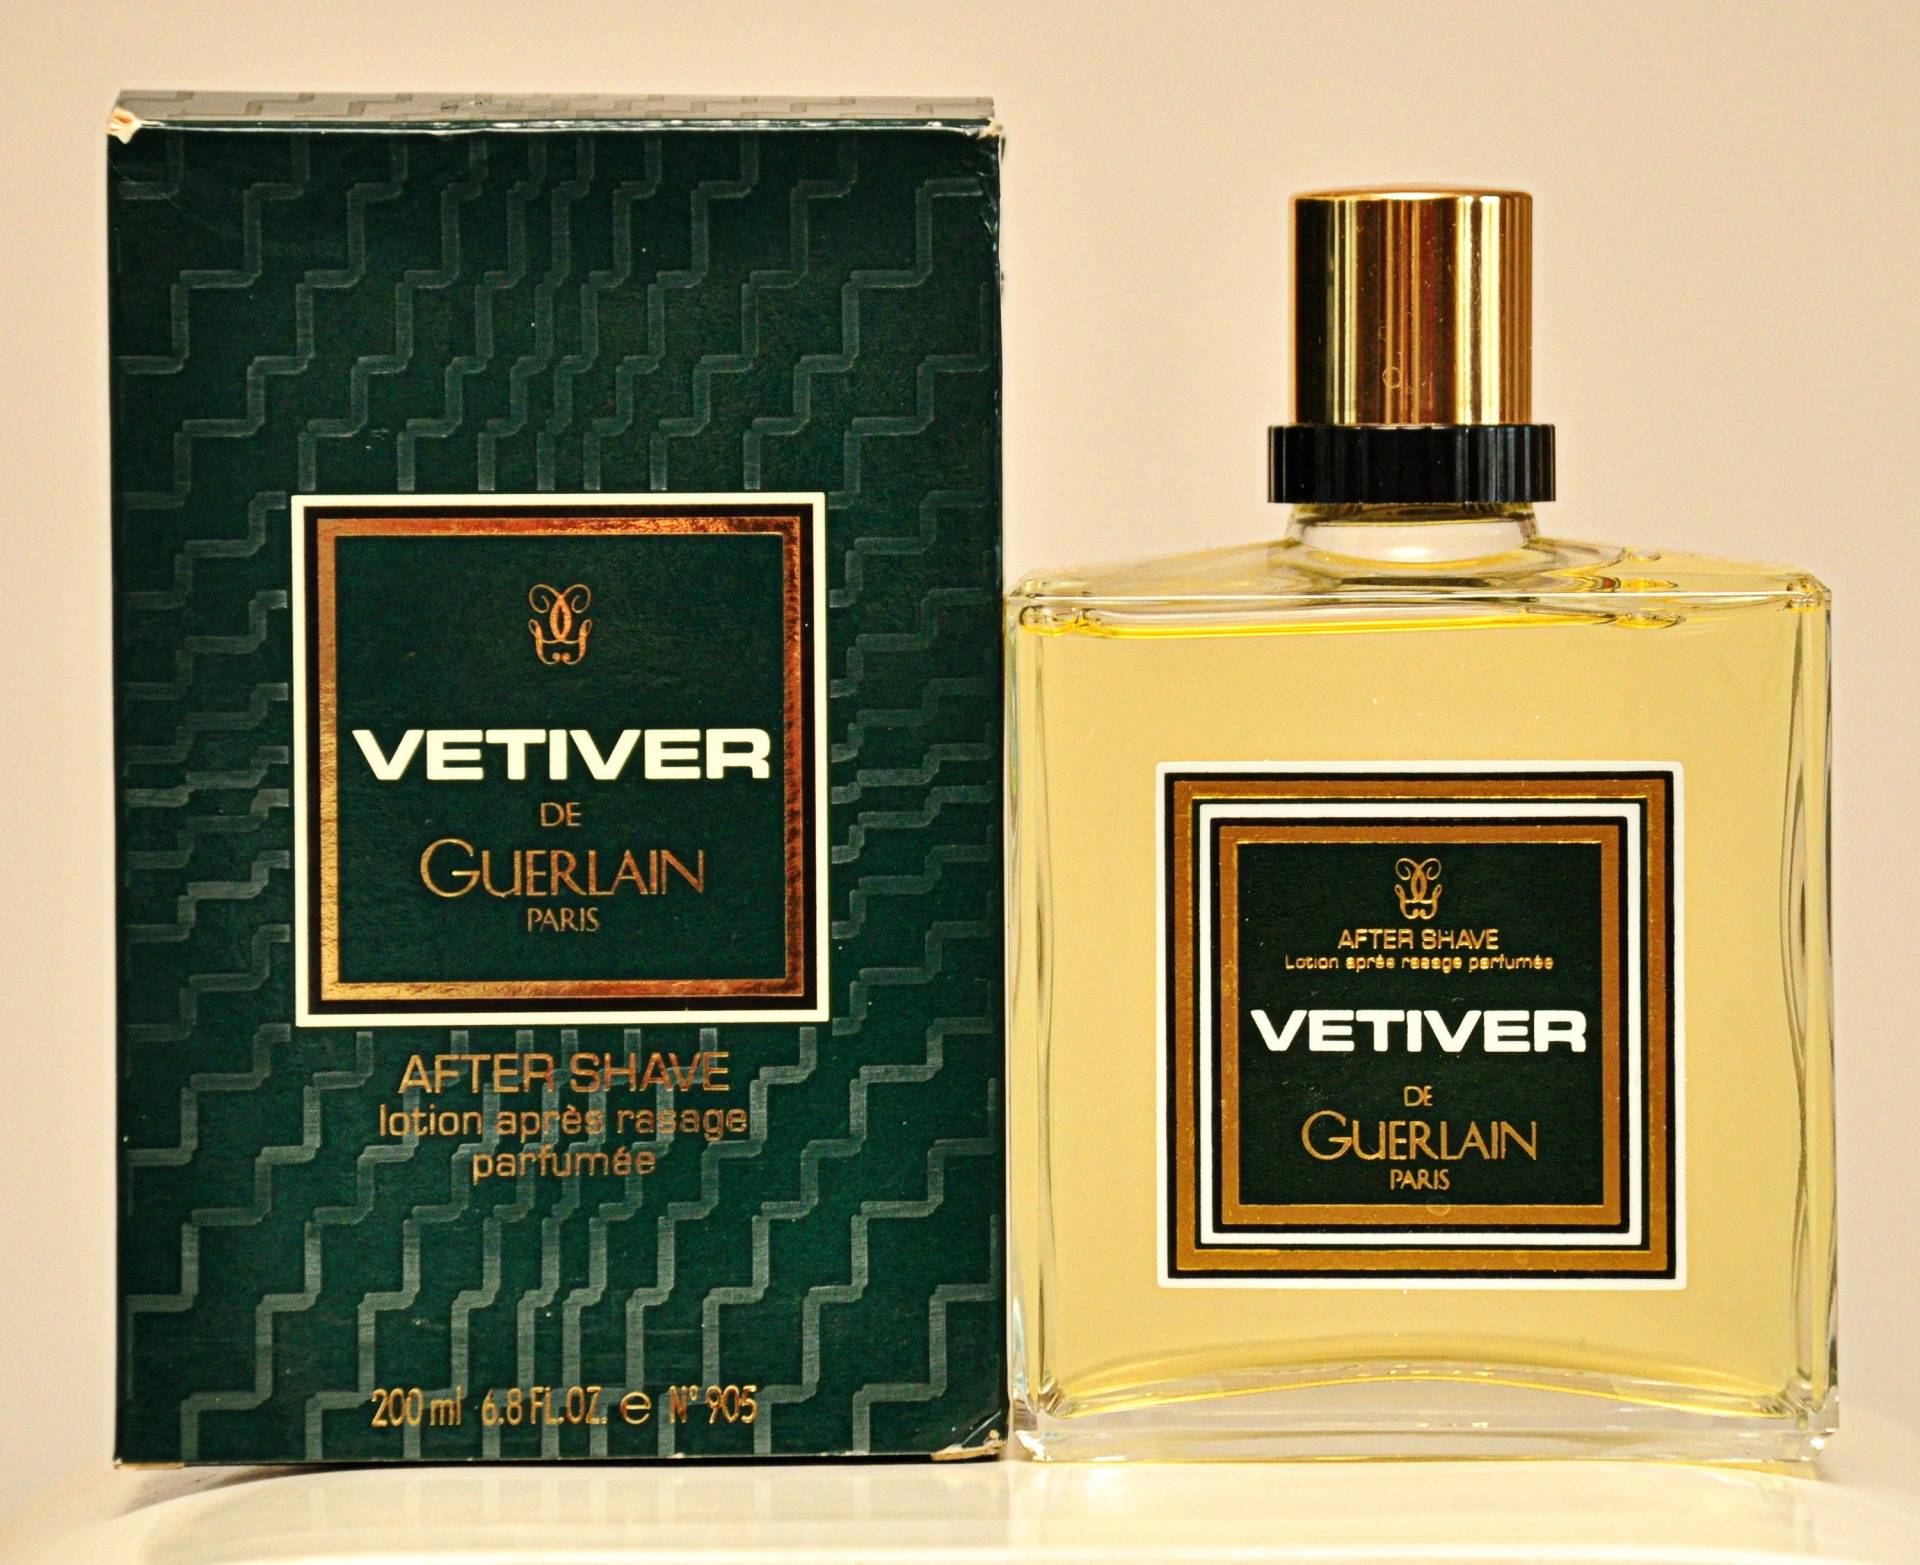 Guerlain Vetiver De Lotion Après Rasage Parfumée 200Ml Splash Non Spray Perfume Man Very Rare Vintage 1959 Version 1992 von YourVintagePerfume